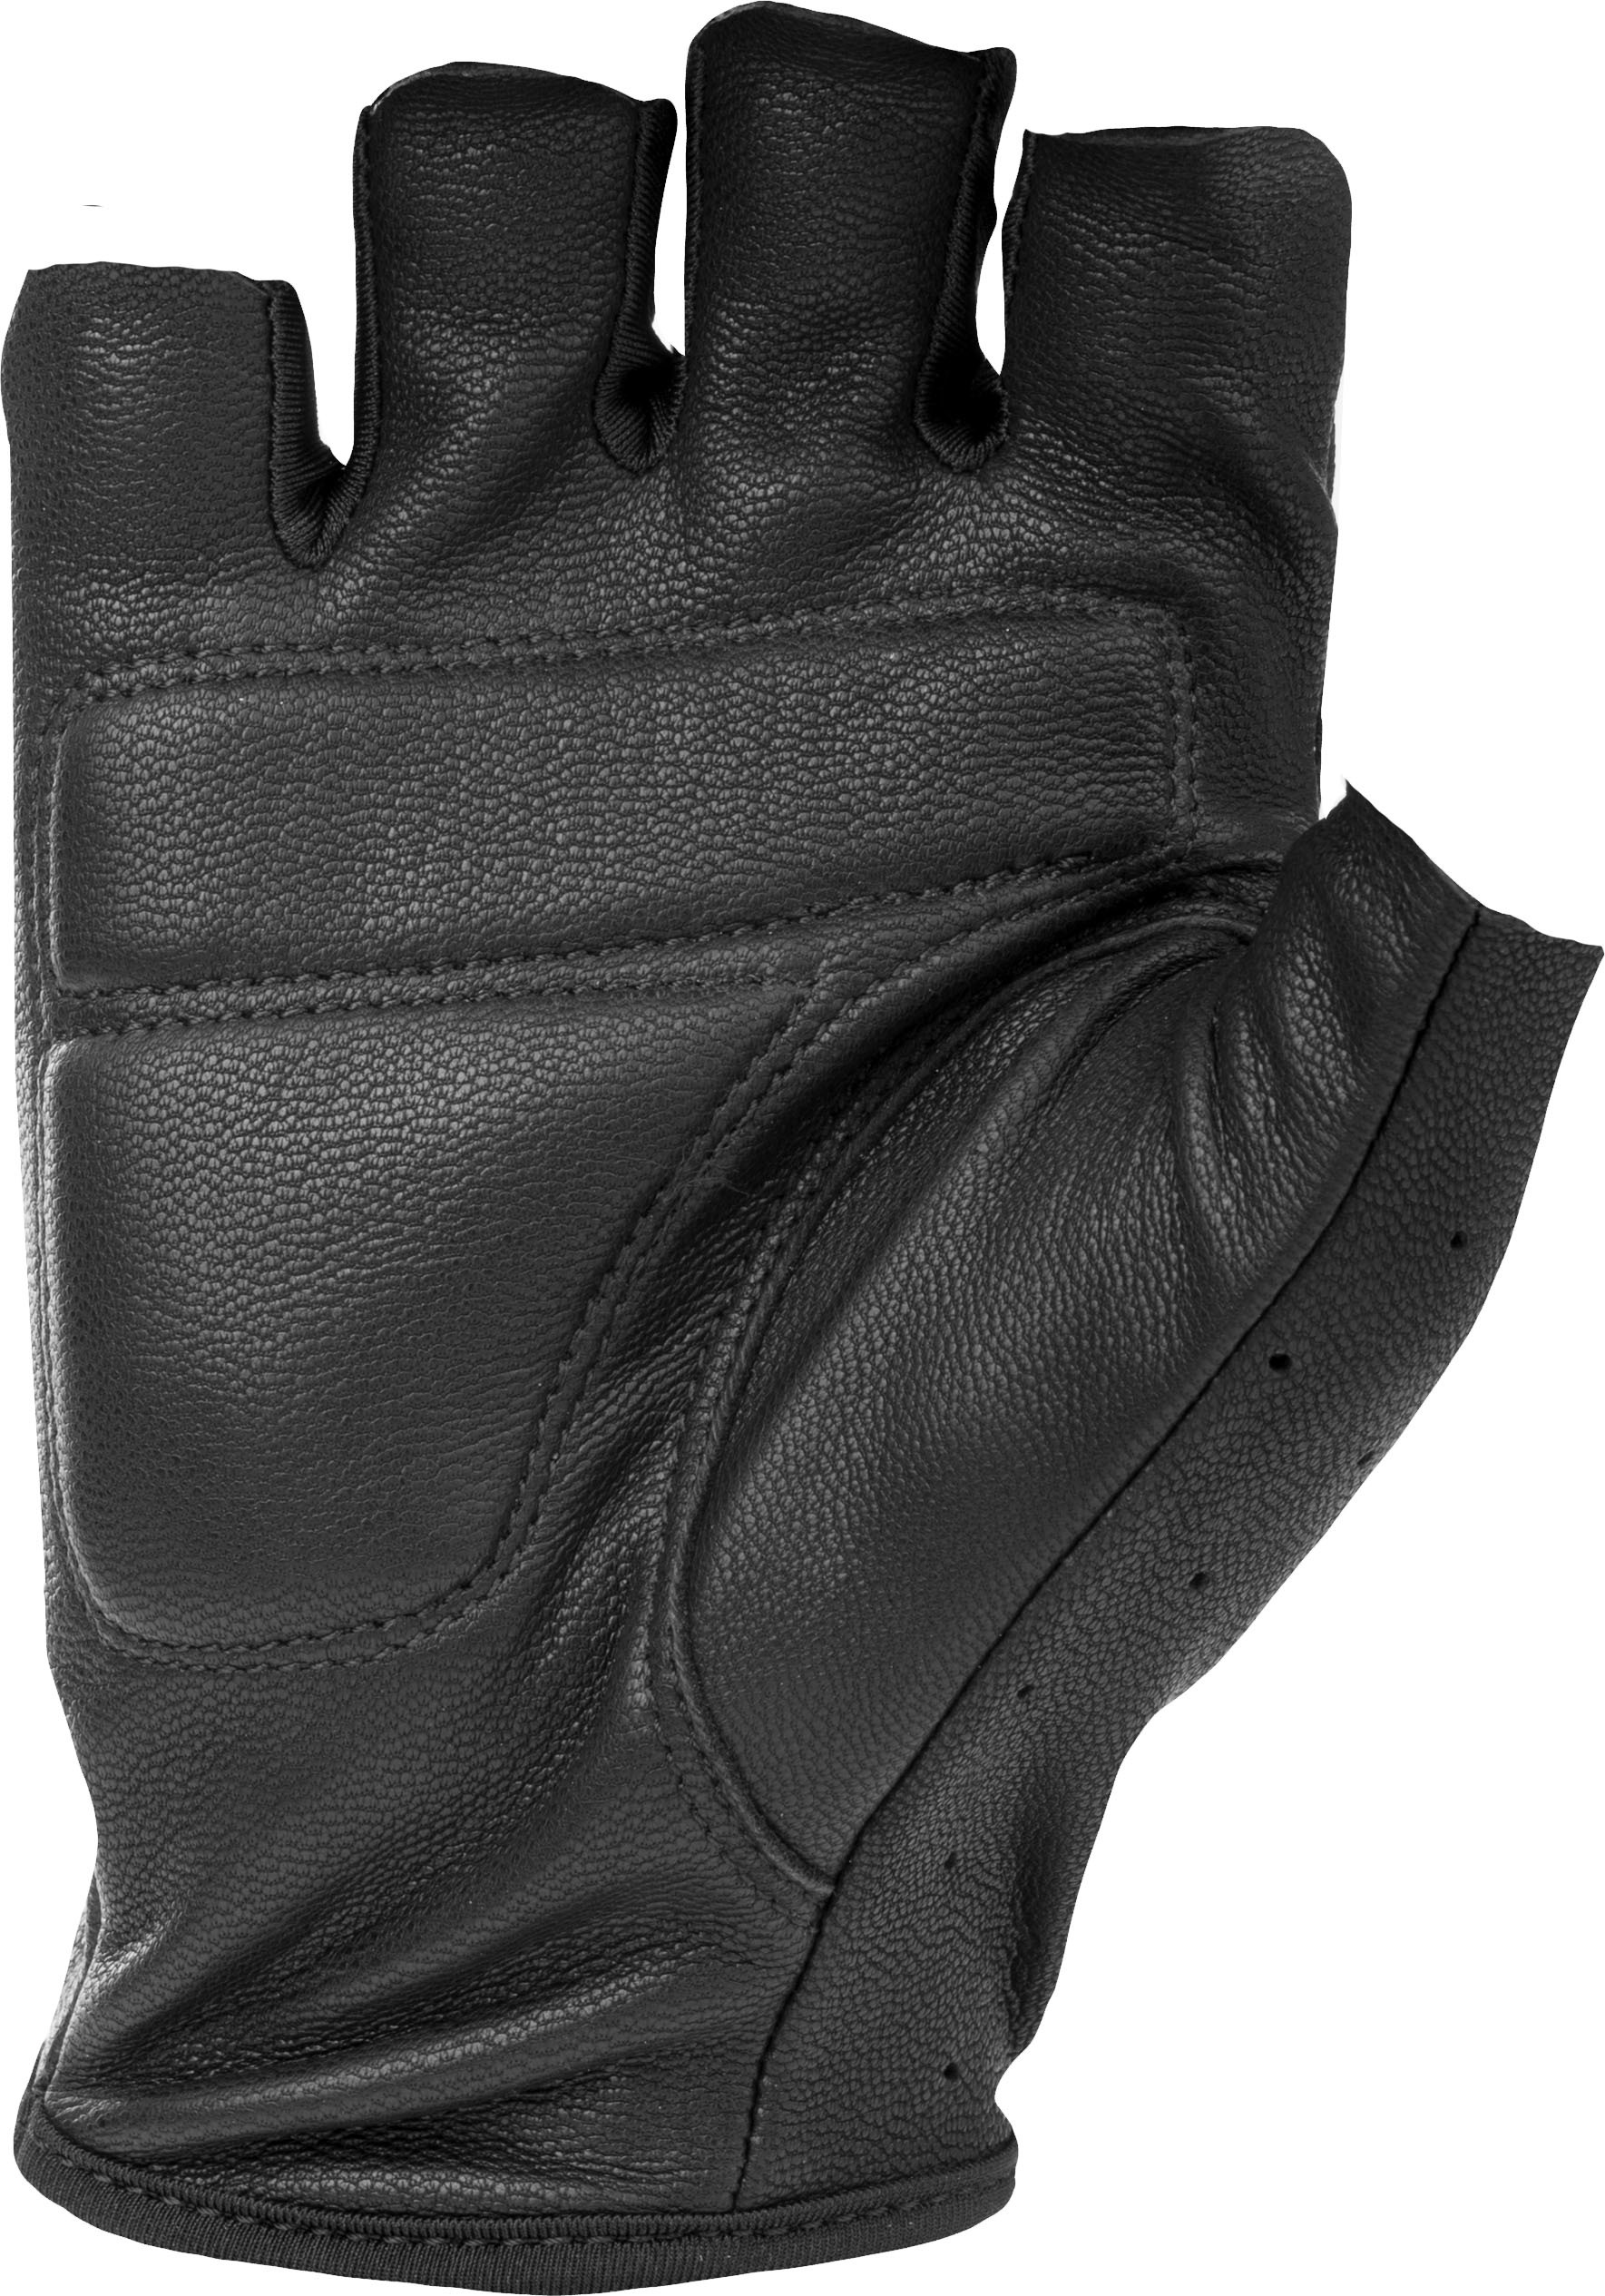 Ranger Riding Gloves Black 3X-Large - Click Image to Close